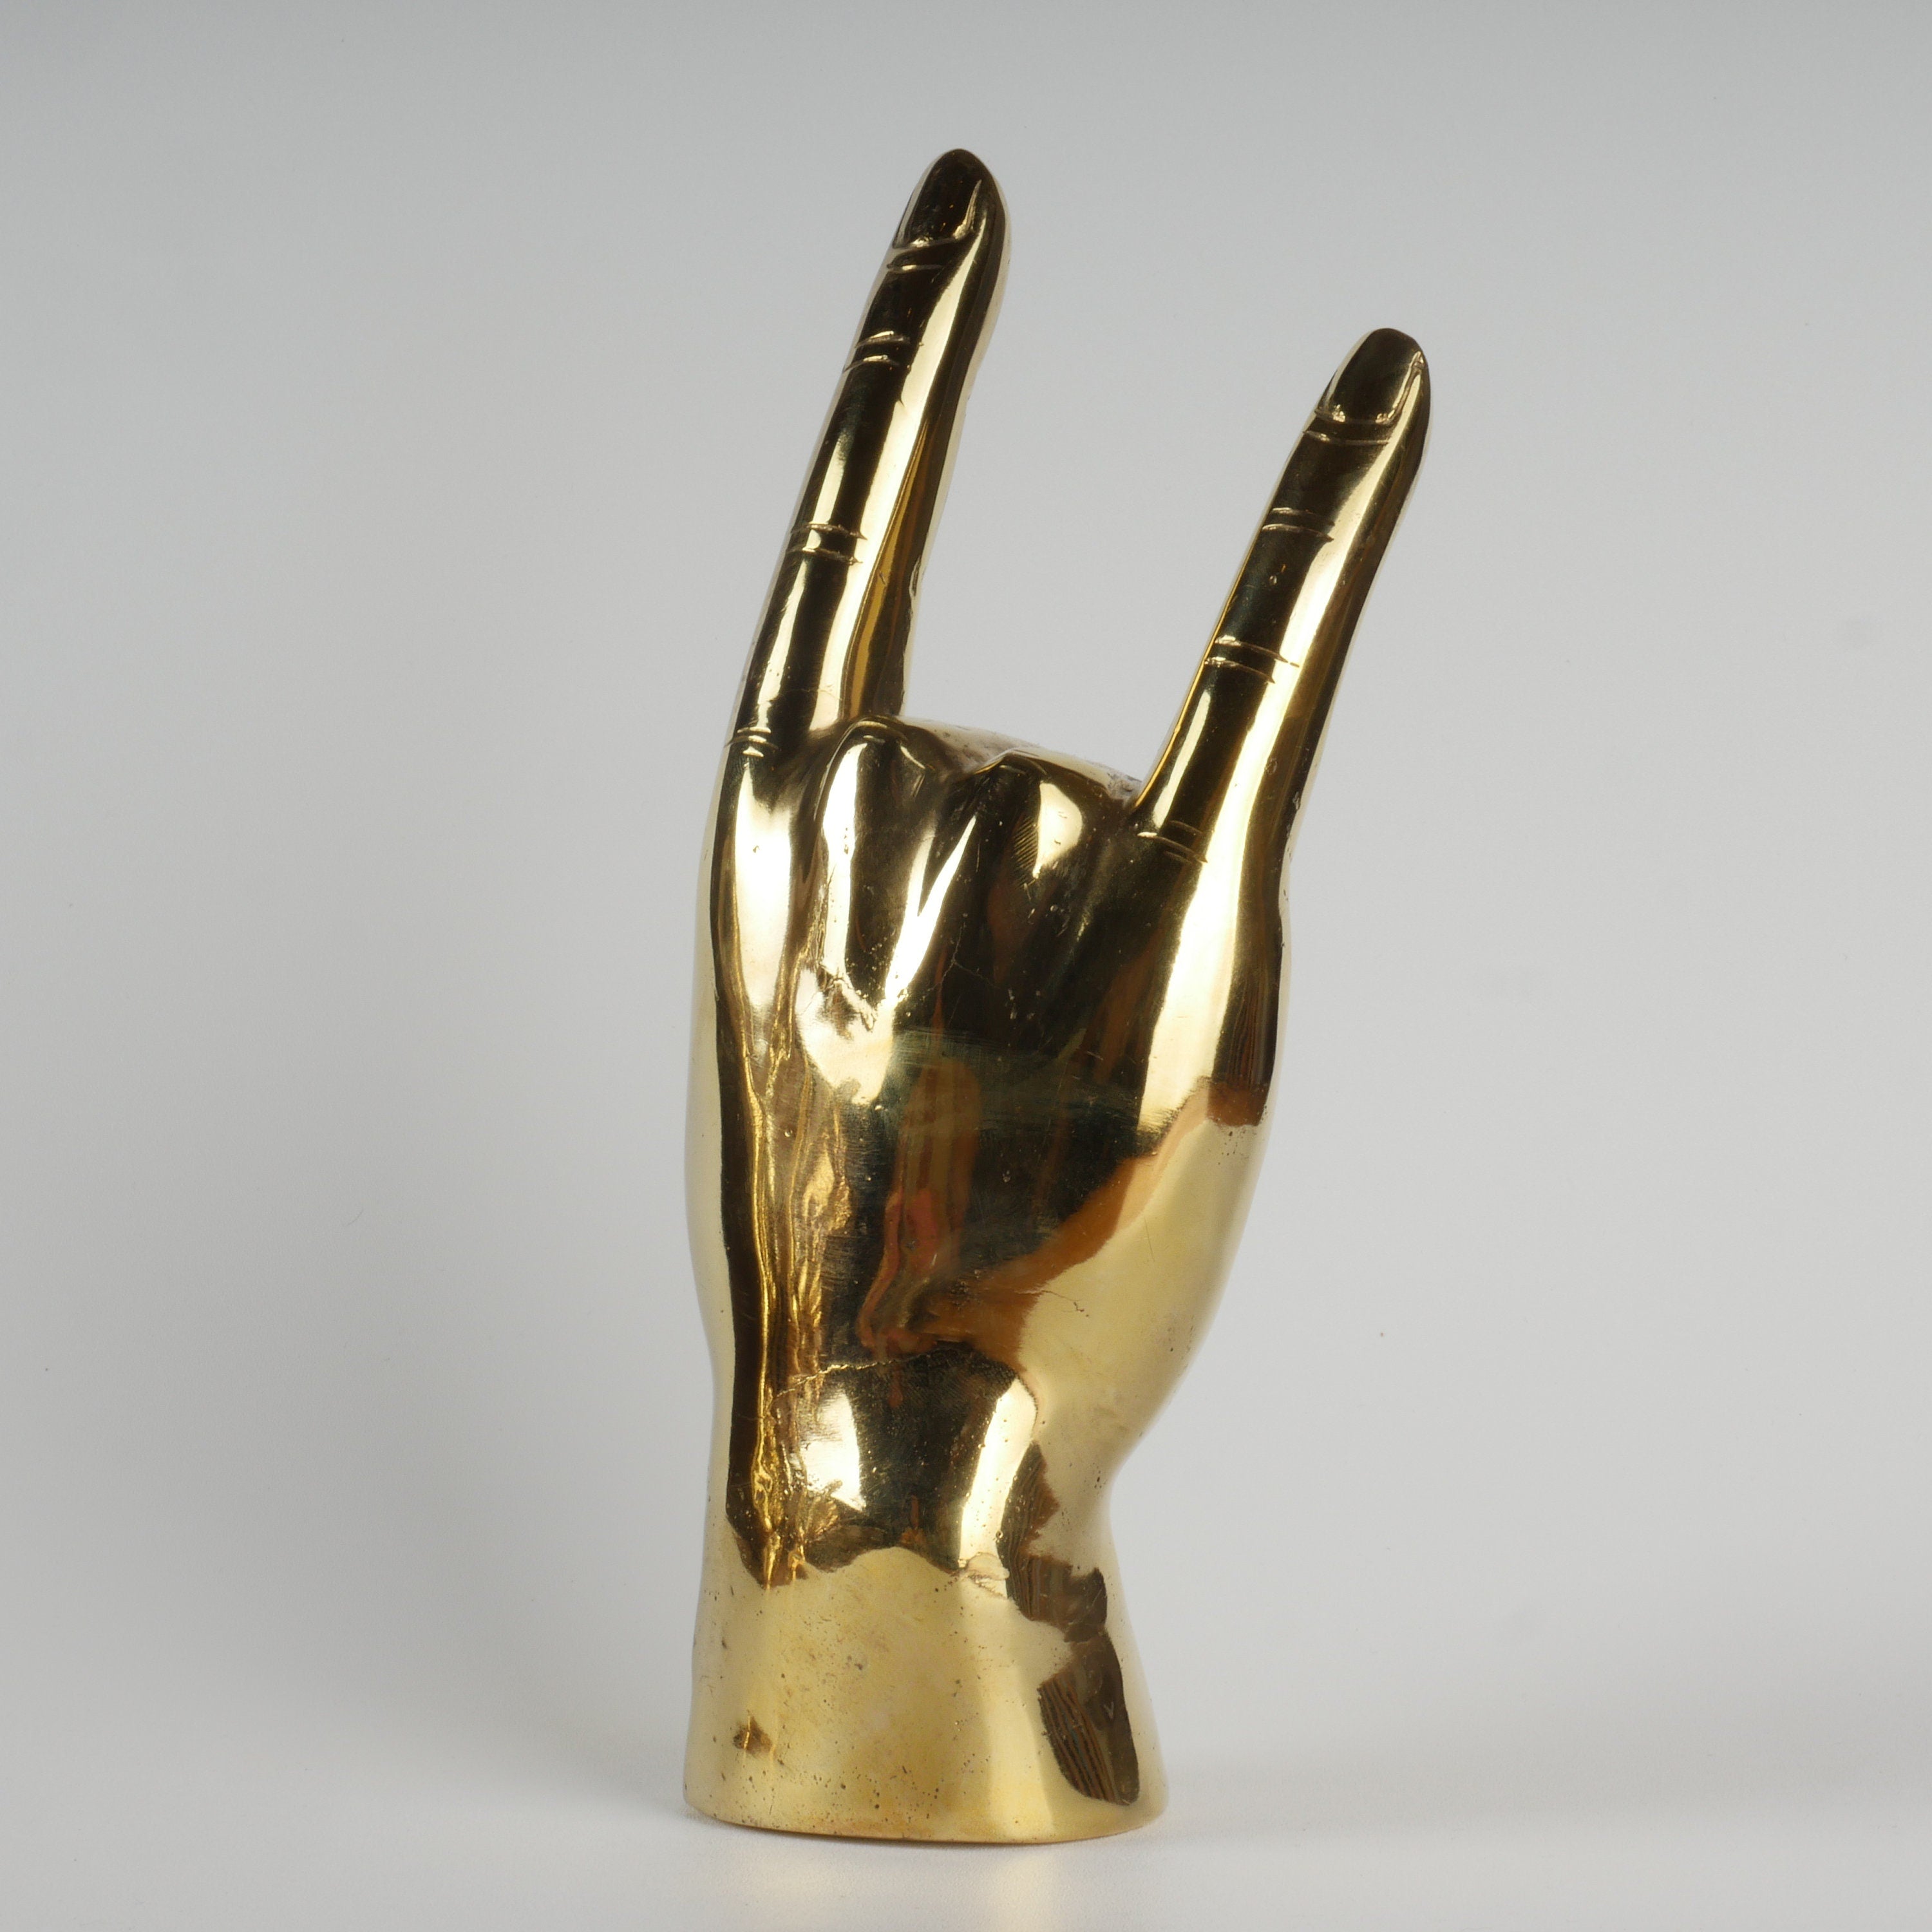 9” Tall Brass Hand Sculpture with Texas Longhorns "Hook 'Em Horns" Like Hand Gesture; Shelf or Table Hand Figure – Made of Polished Brass